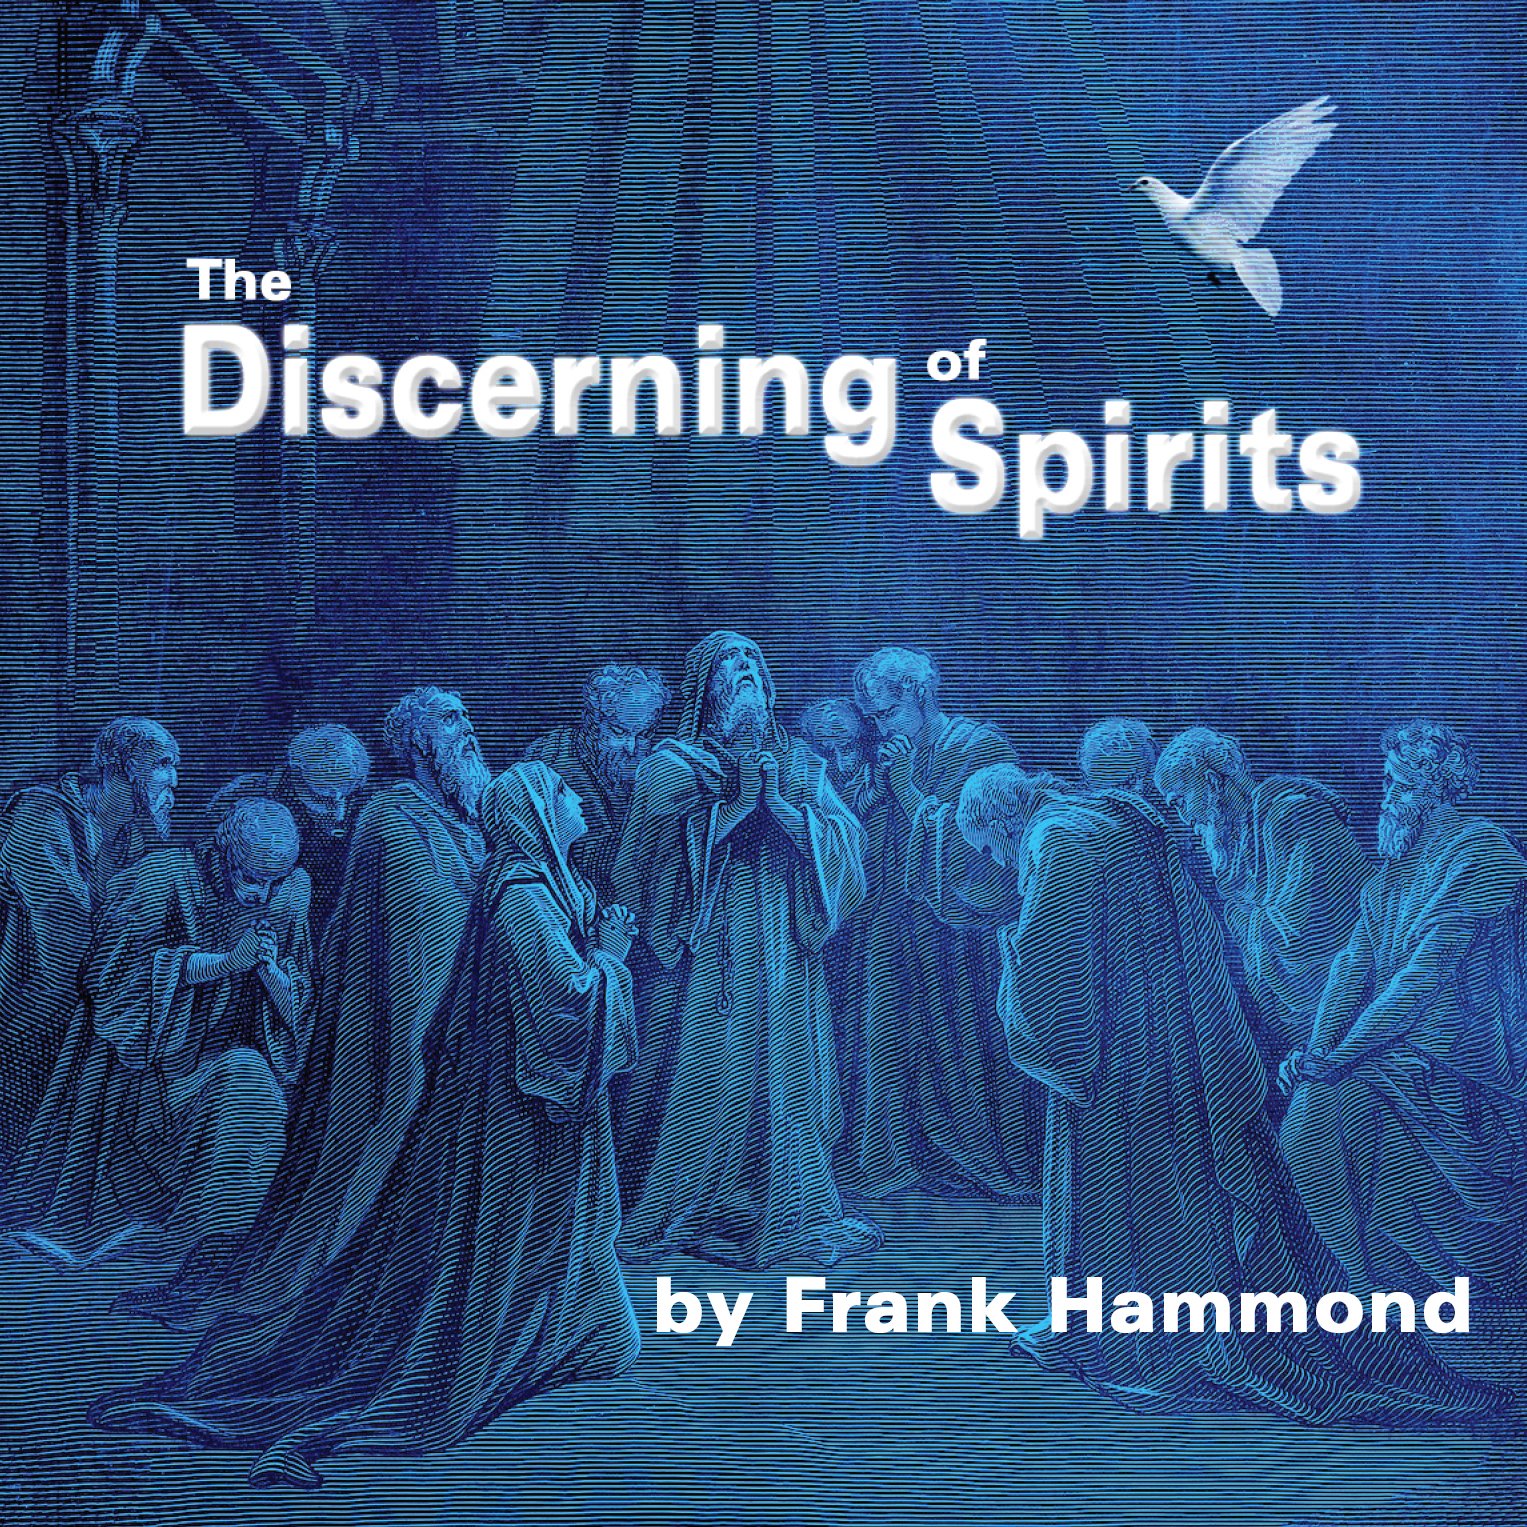 AUDIO: The Discerning of Spirits (1 CD)